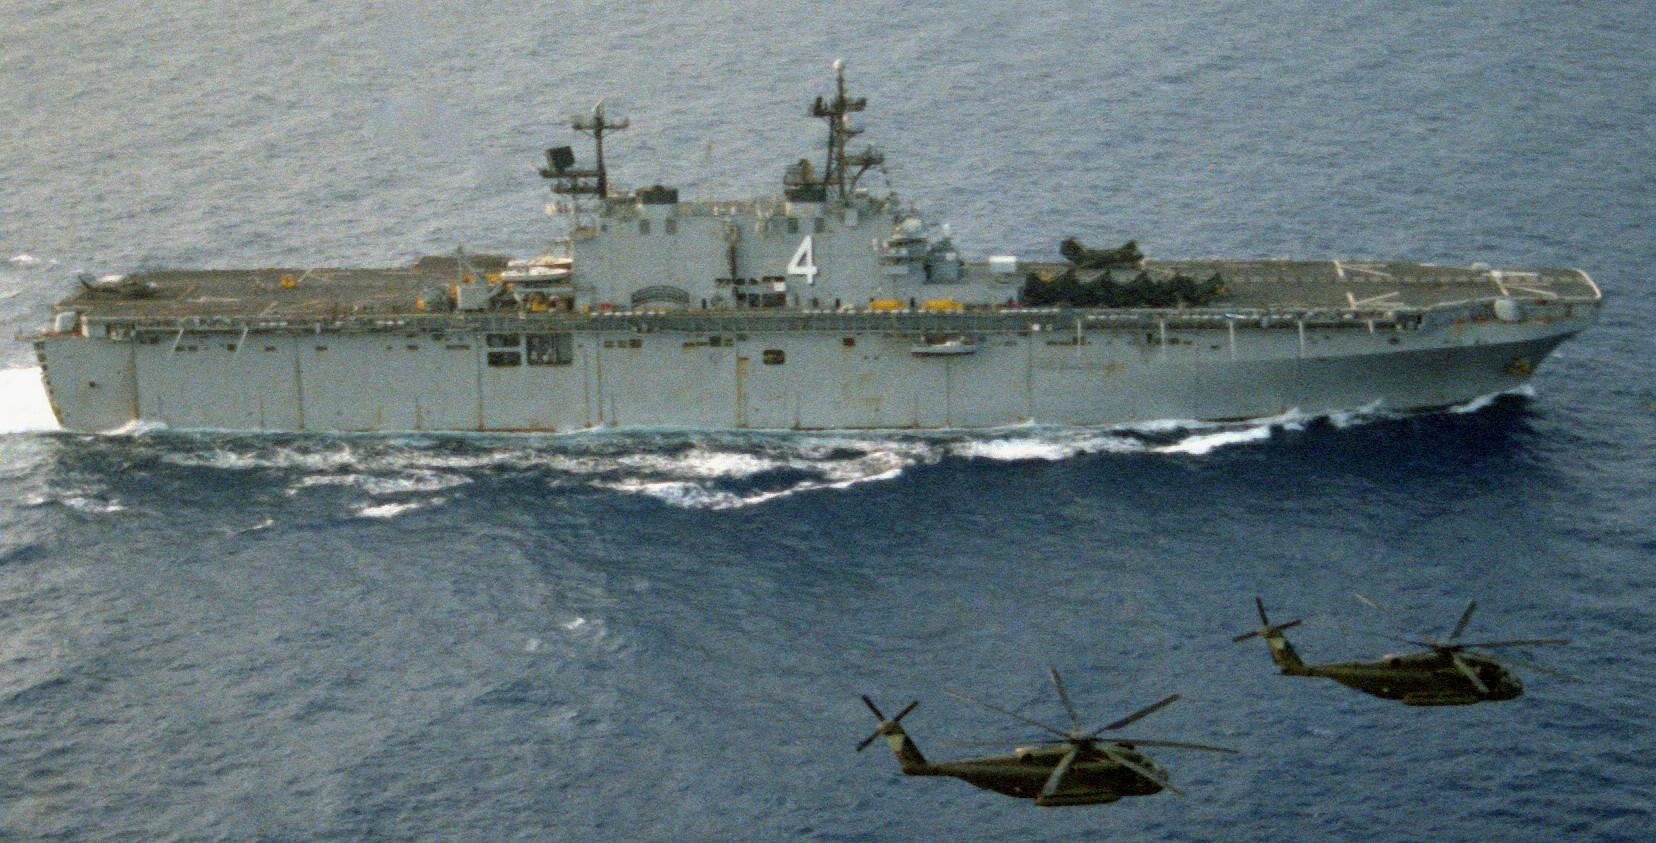 lha-4 uss nassau tarawa class amphibious assault ship us navy 115 nato exercise northern wedding norway 1986